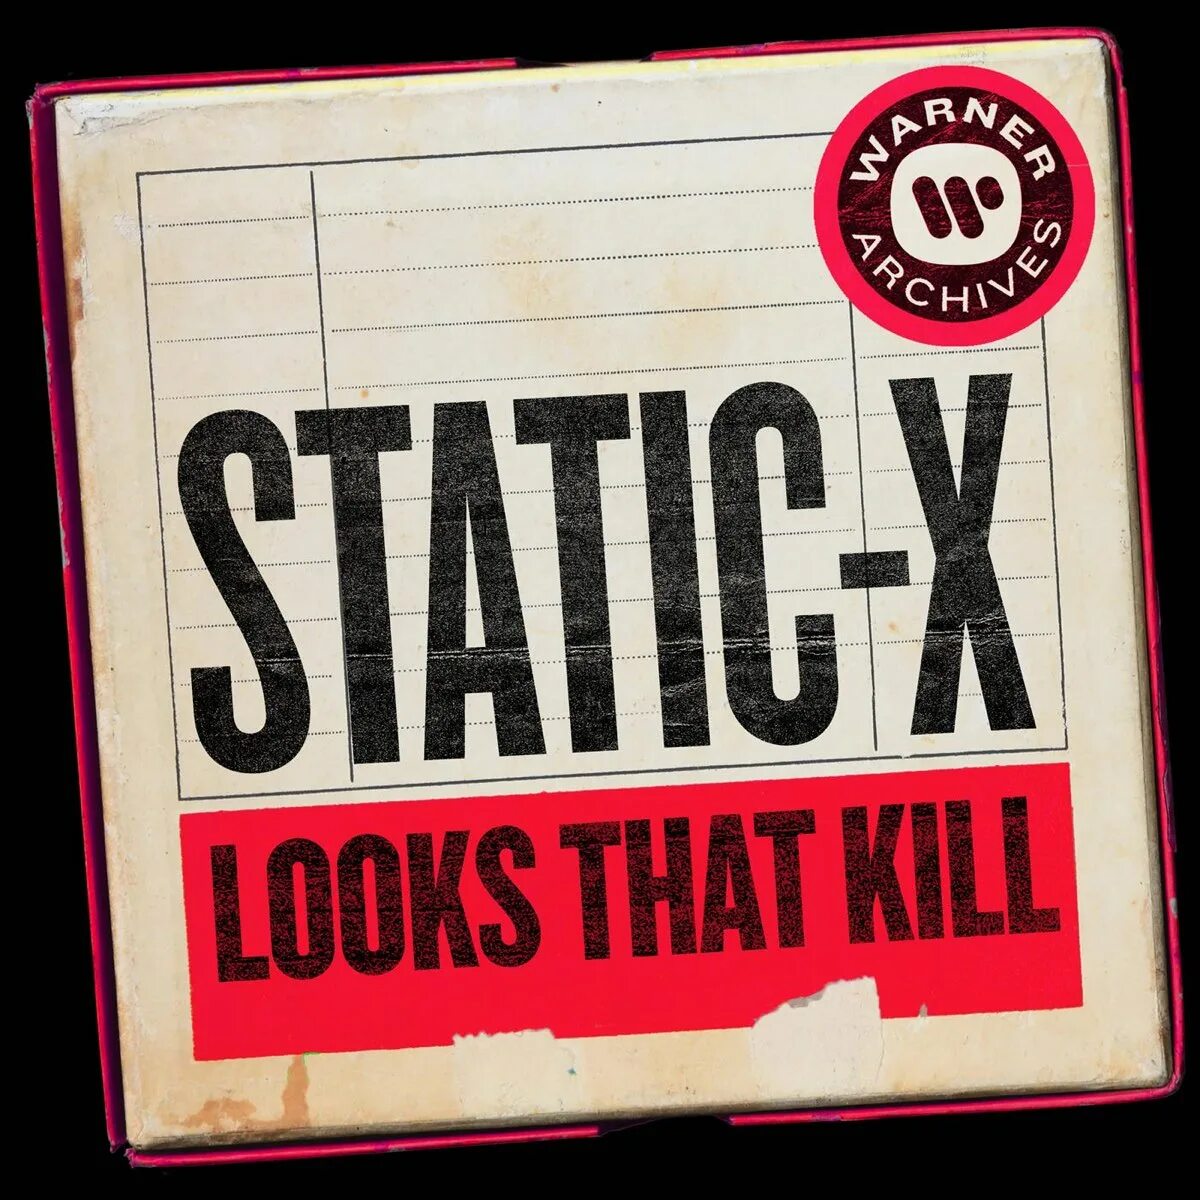 Static x Band. Static x логотип. Static x изображения. Kill status.